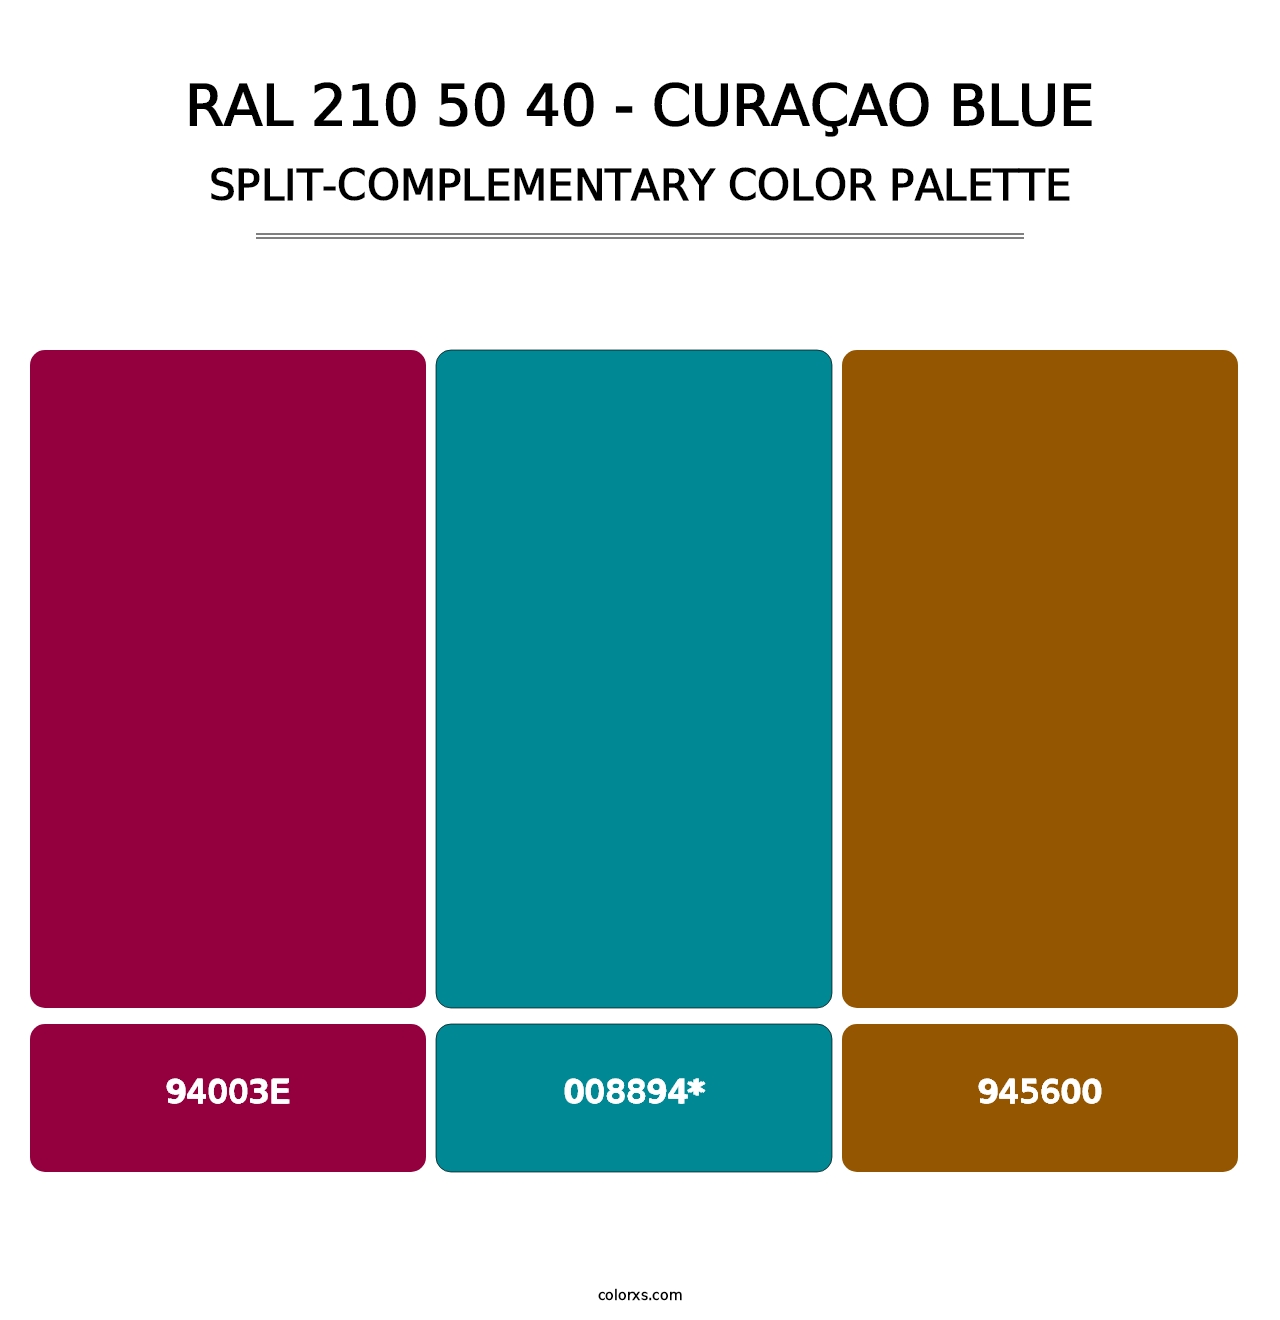 RAL 210 50 40 - Curaçao Blue - Split-Complementary Color Palette